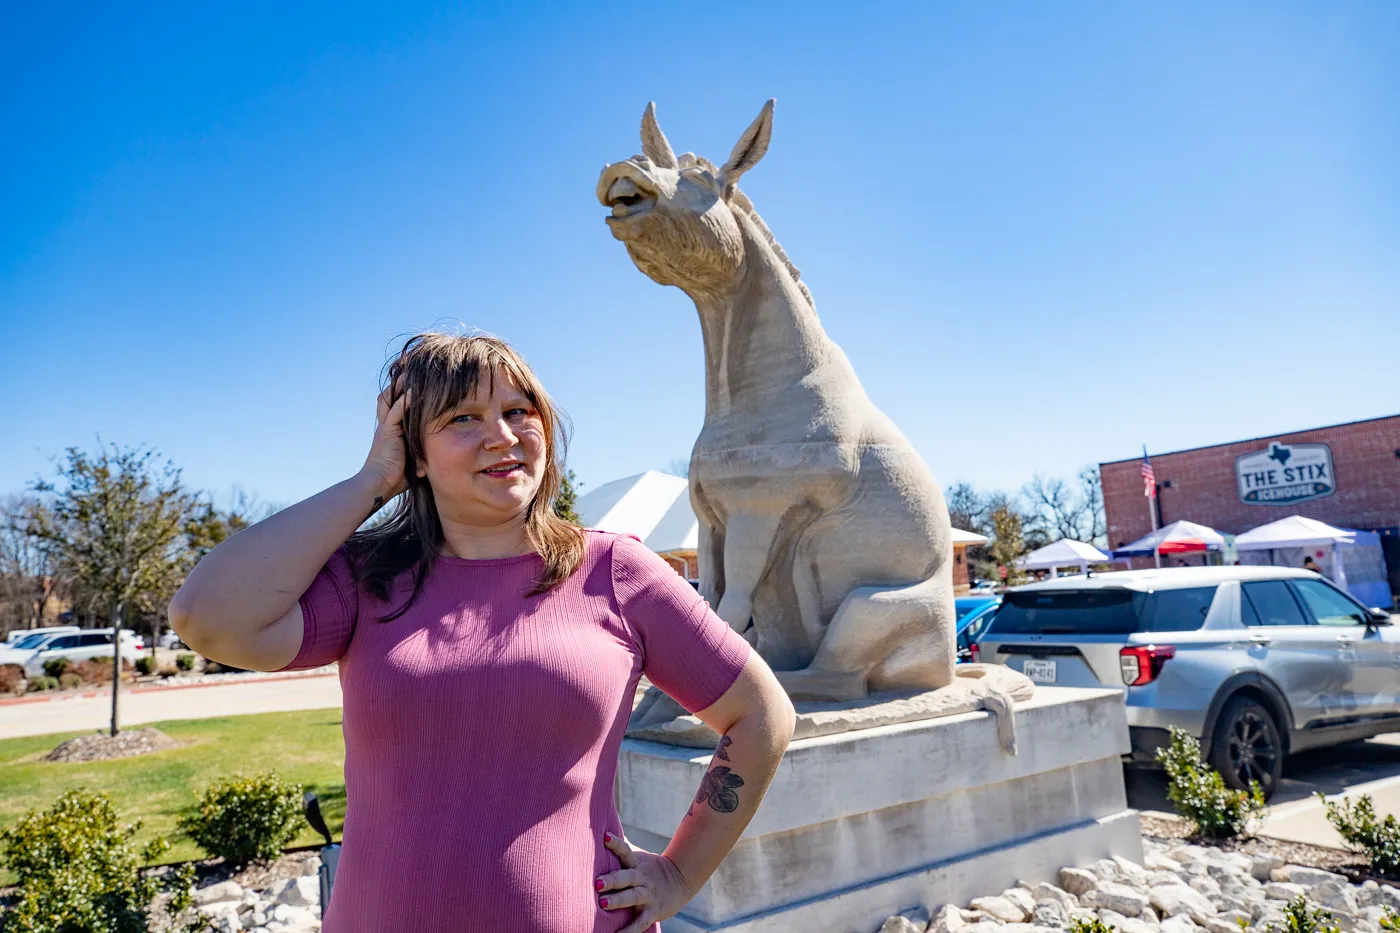 LMAO Sculpture in McKinney, Texas (Mule Statue)